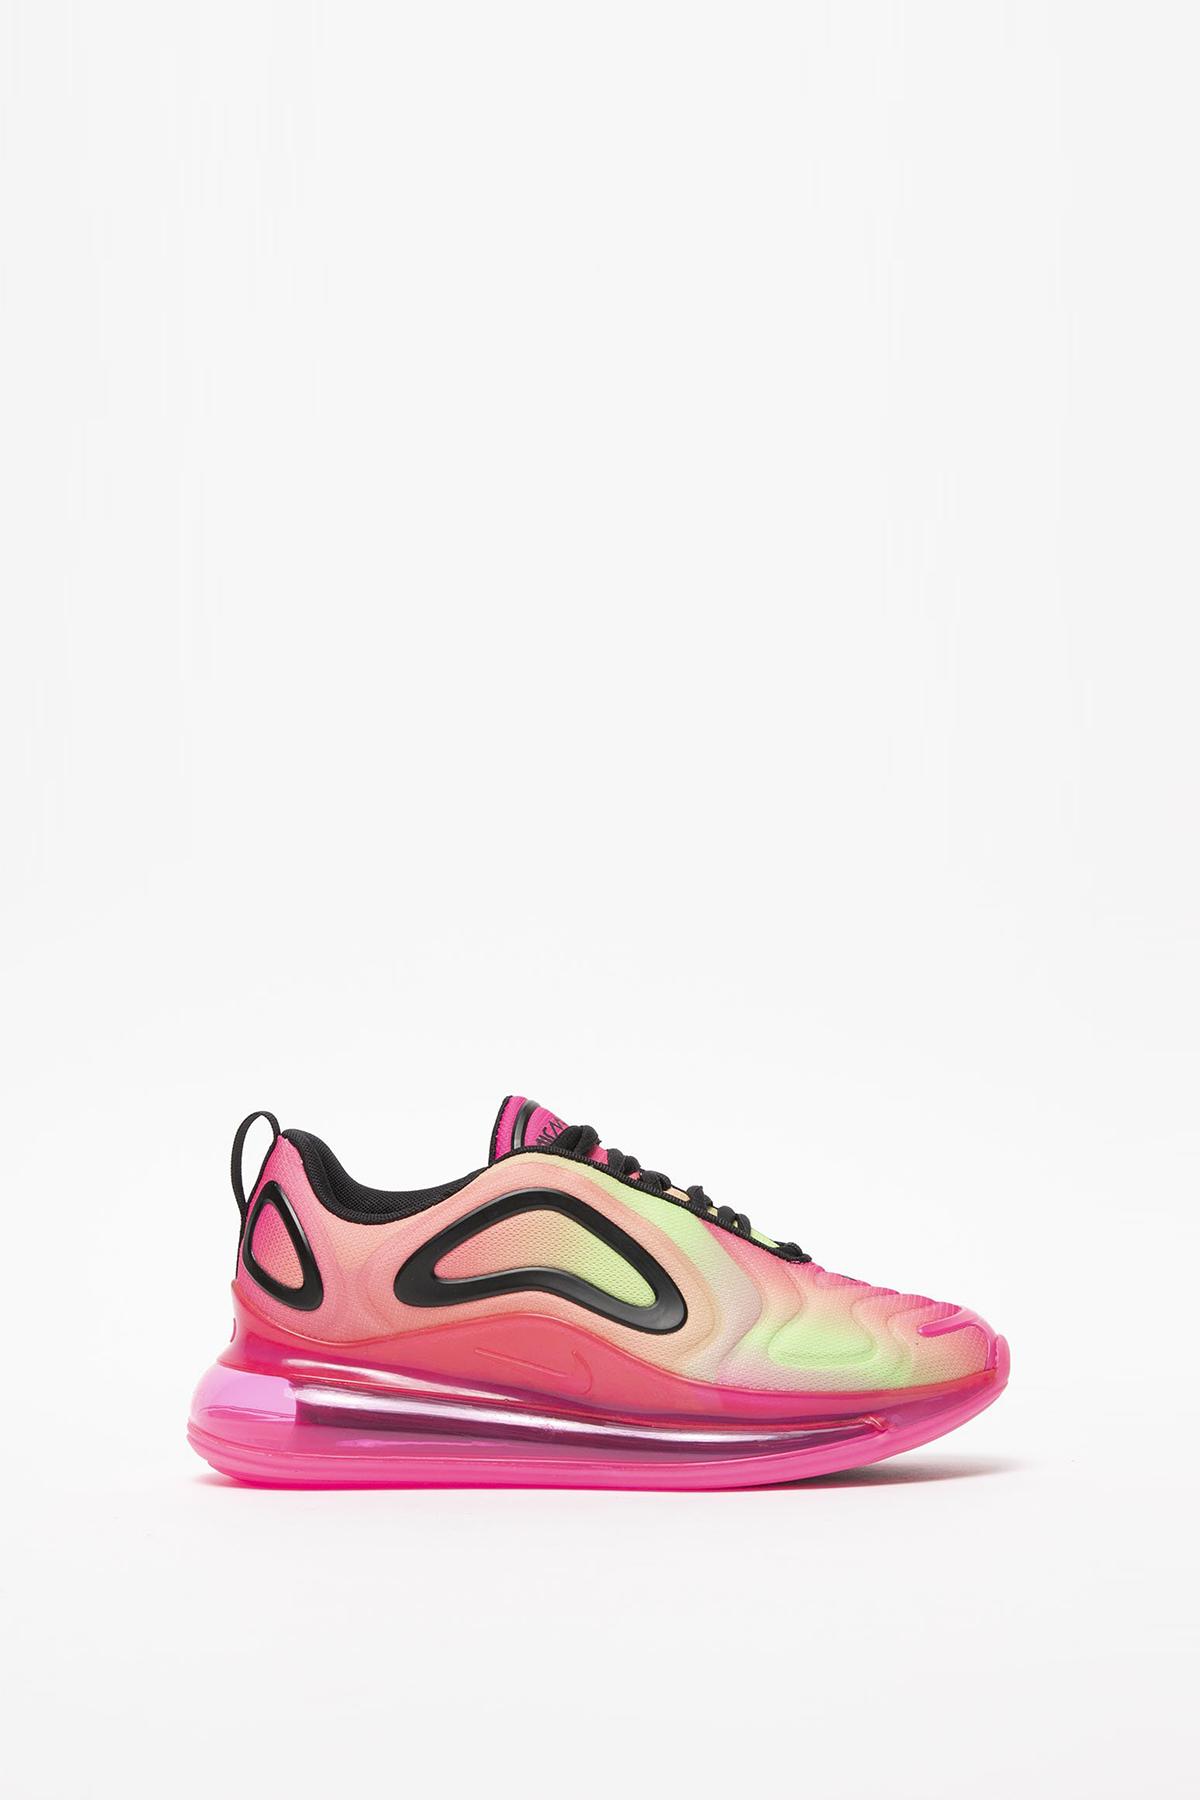 Nike Felt Women's Air Max 720 Print in Pink - Lyst